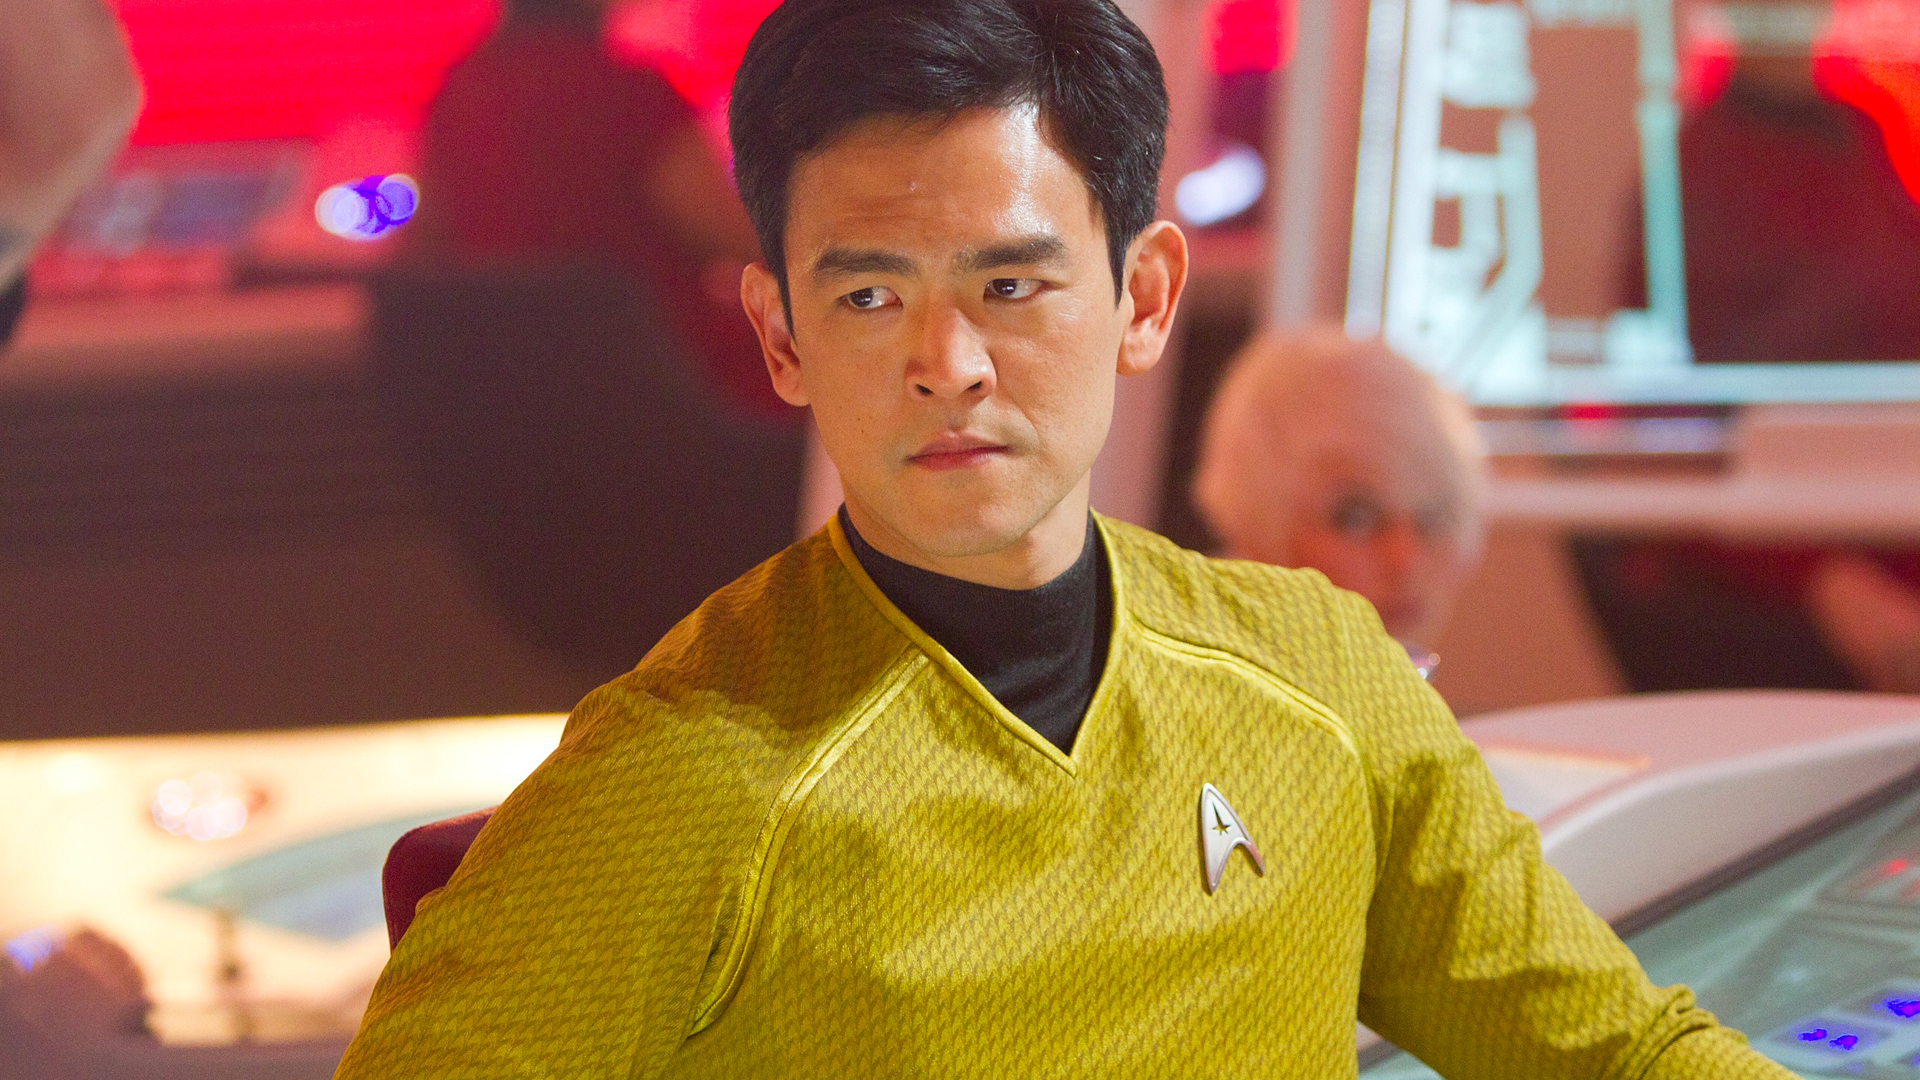 Star Trek 4: John Cho Thinks Film Will Happen At Some Point